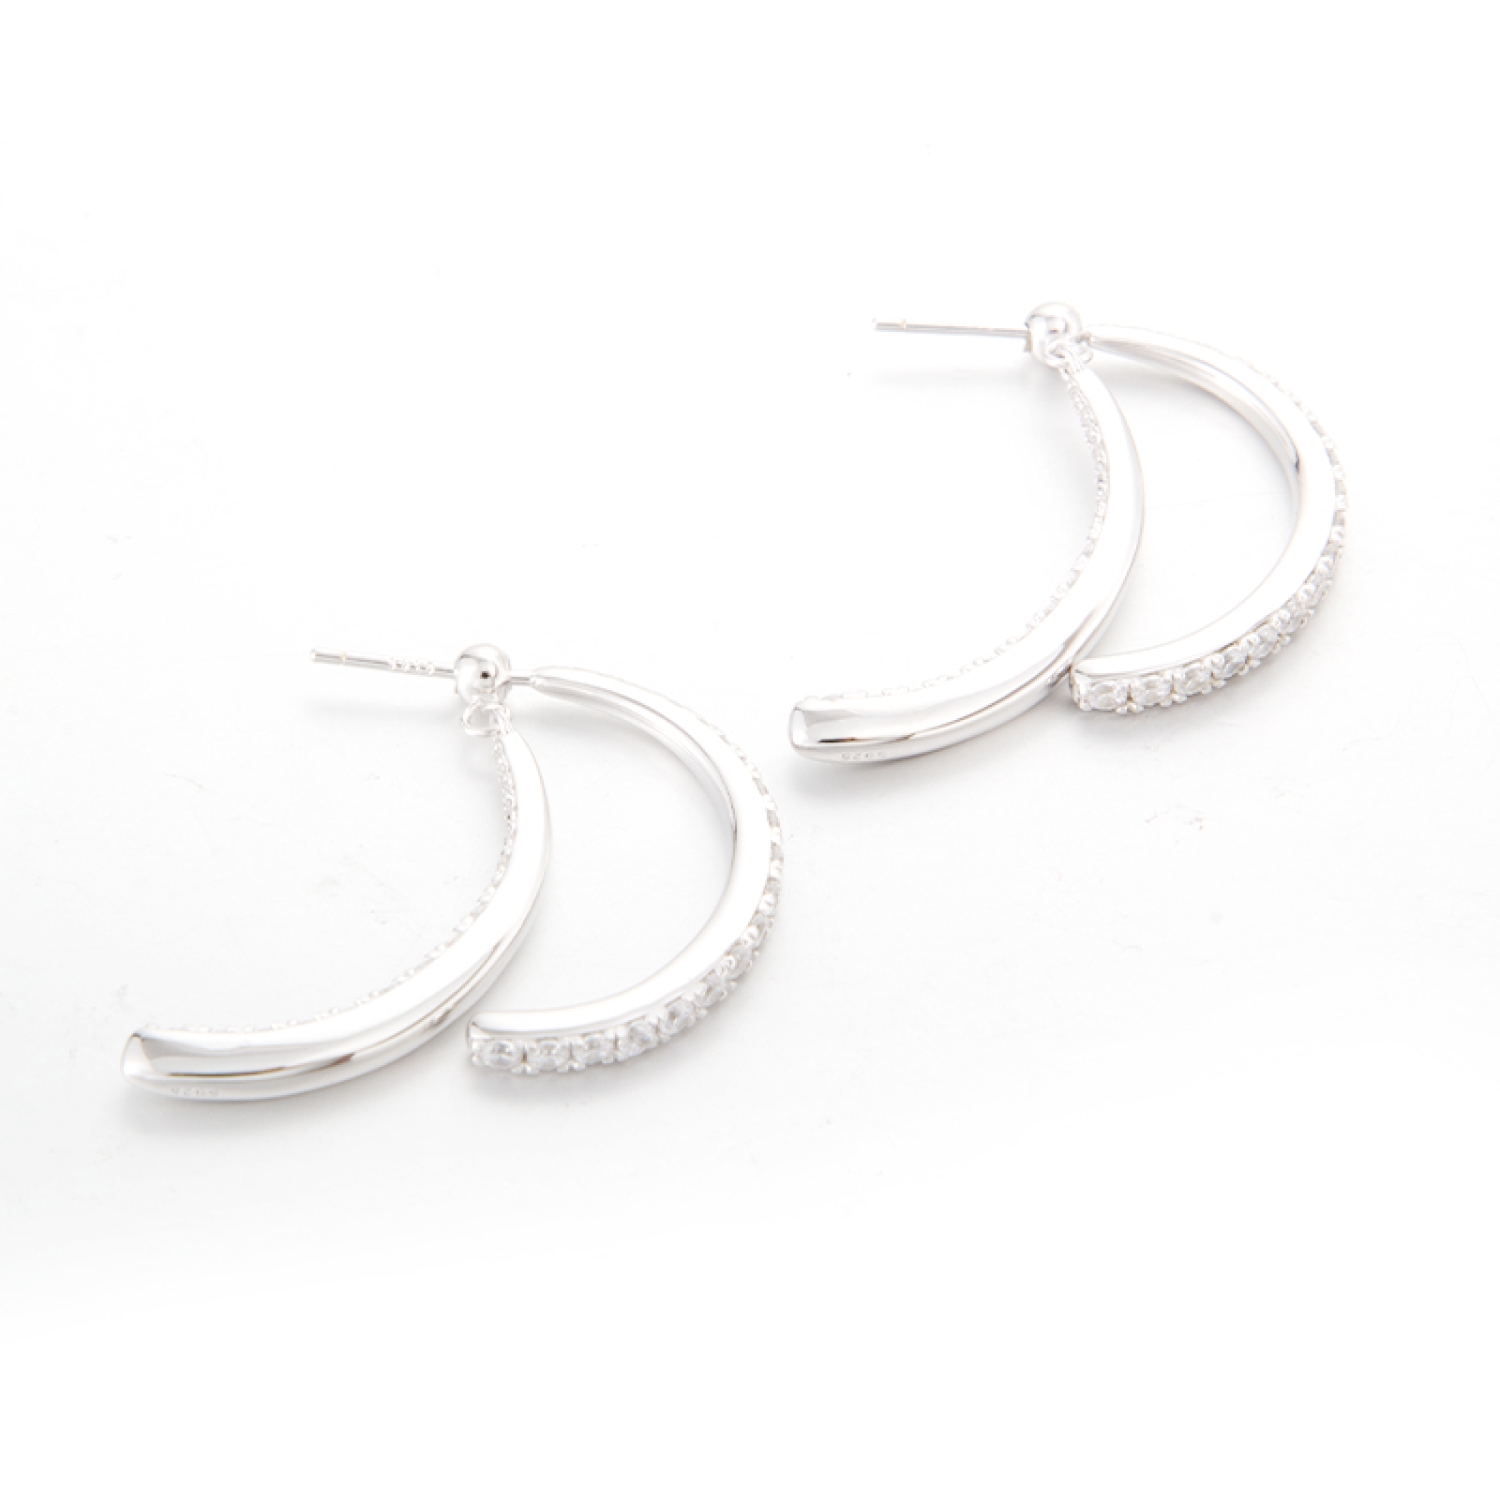 crystal design Crystal stud earring fitting dual-way wear in 925 sterling silver